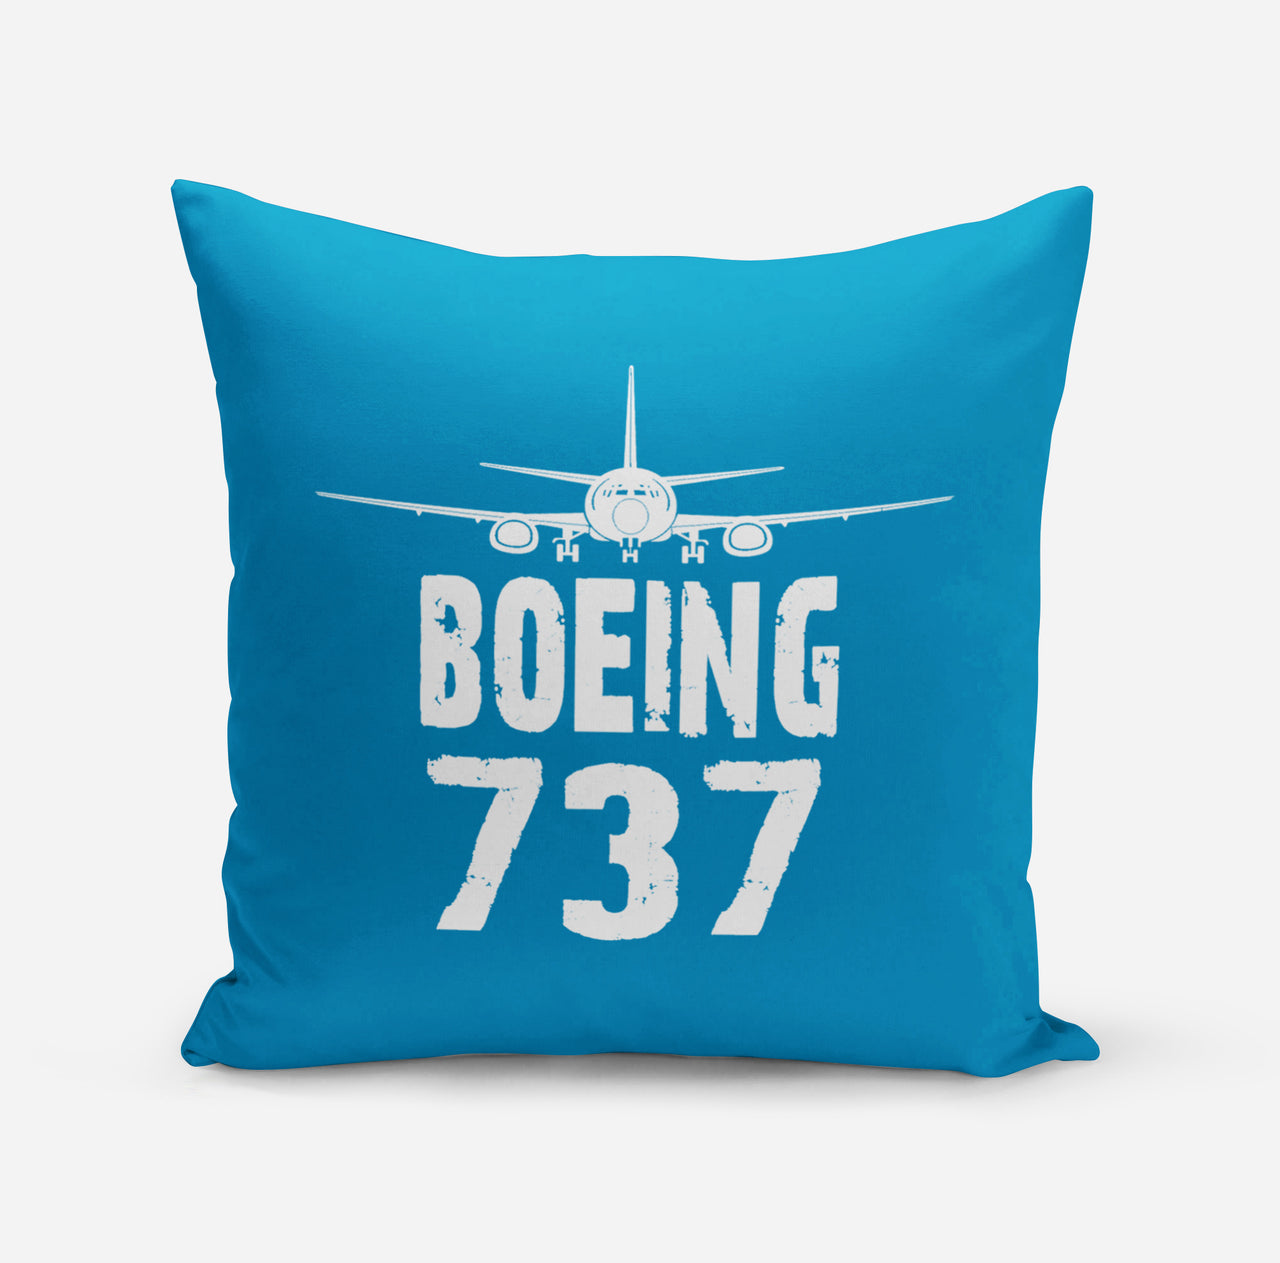 Boeing 737 & Plane Designed Pillows